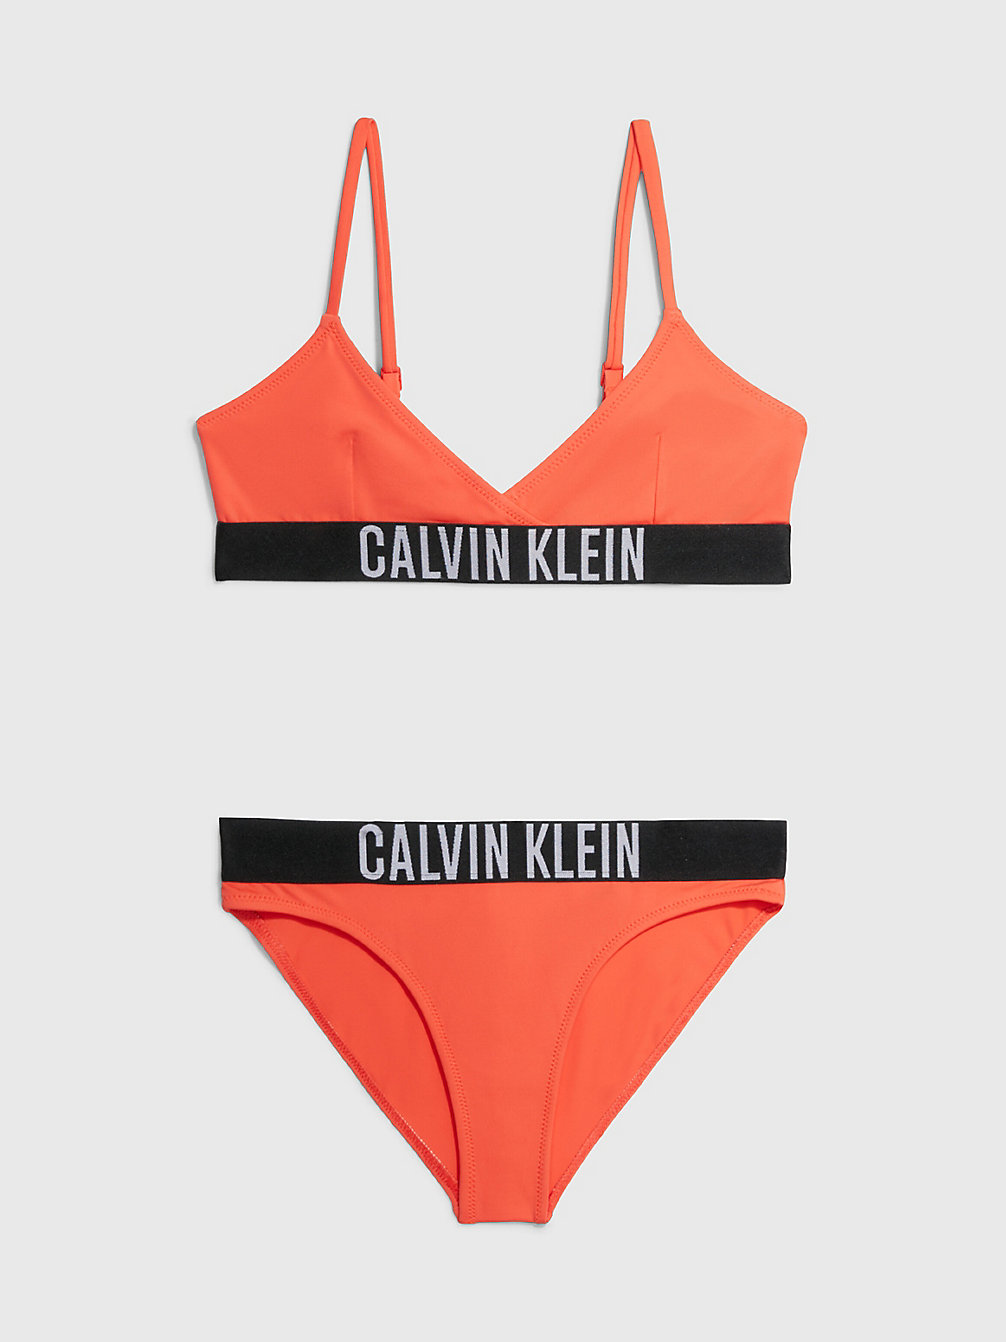 BRIGHT VERMILLION Ensemble Bikini Triangle Pour Fille - Intense Power undefined filles Calvin Klein